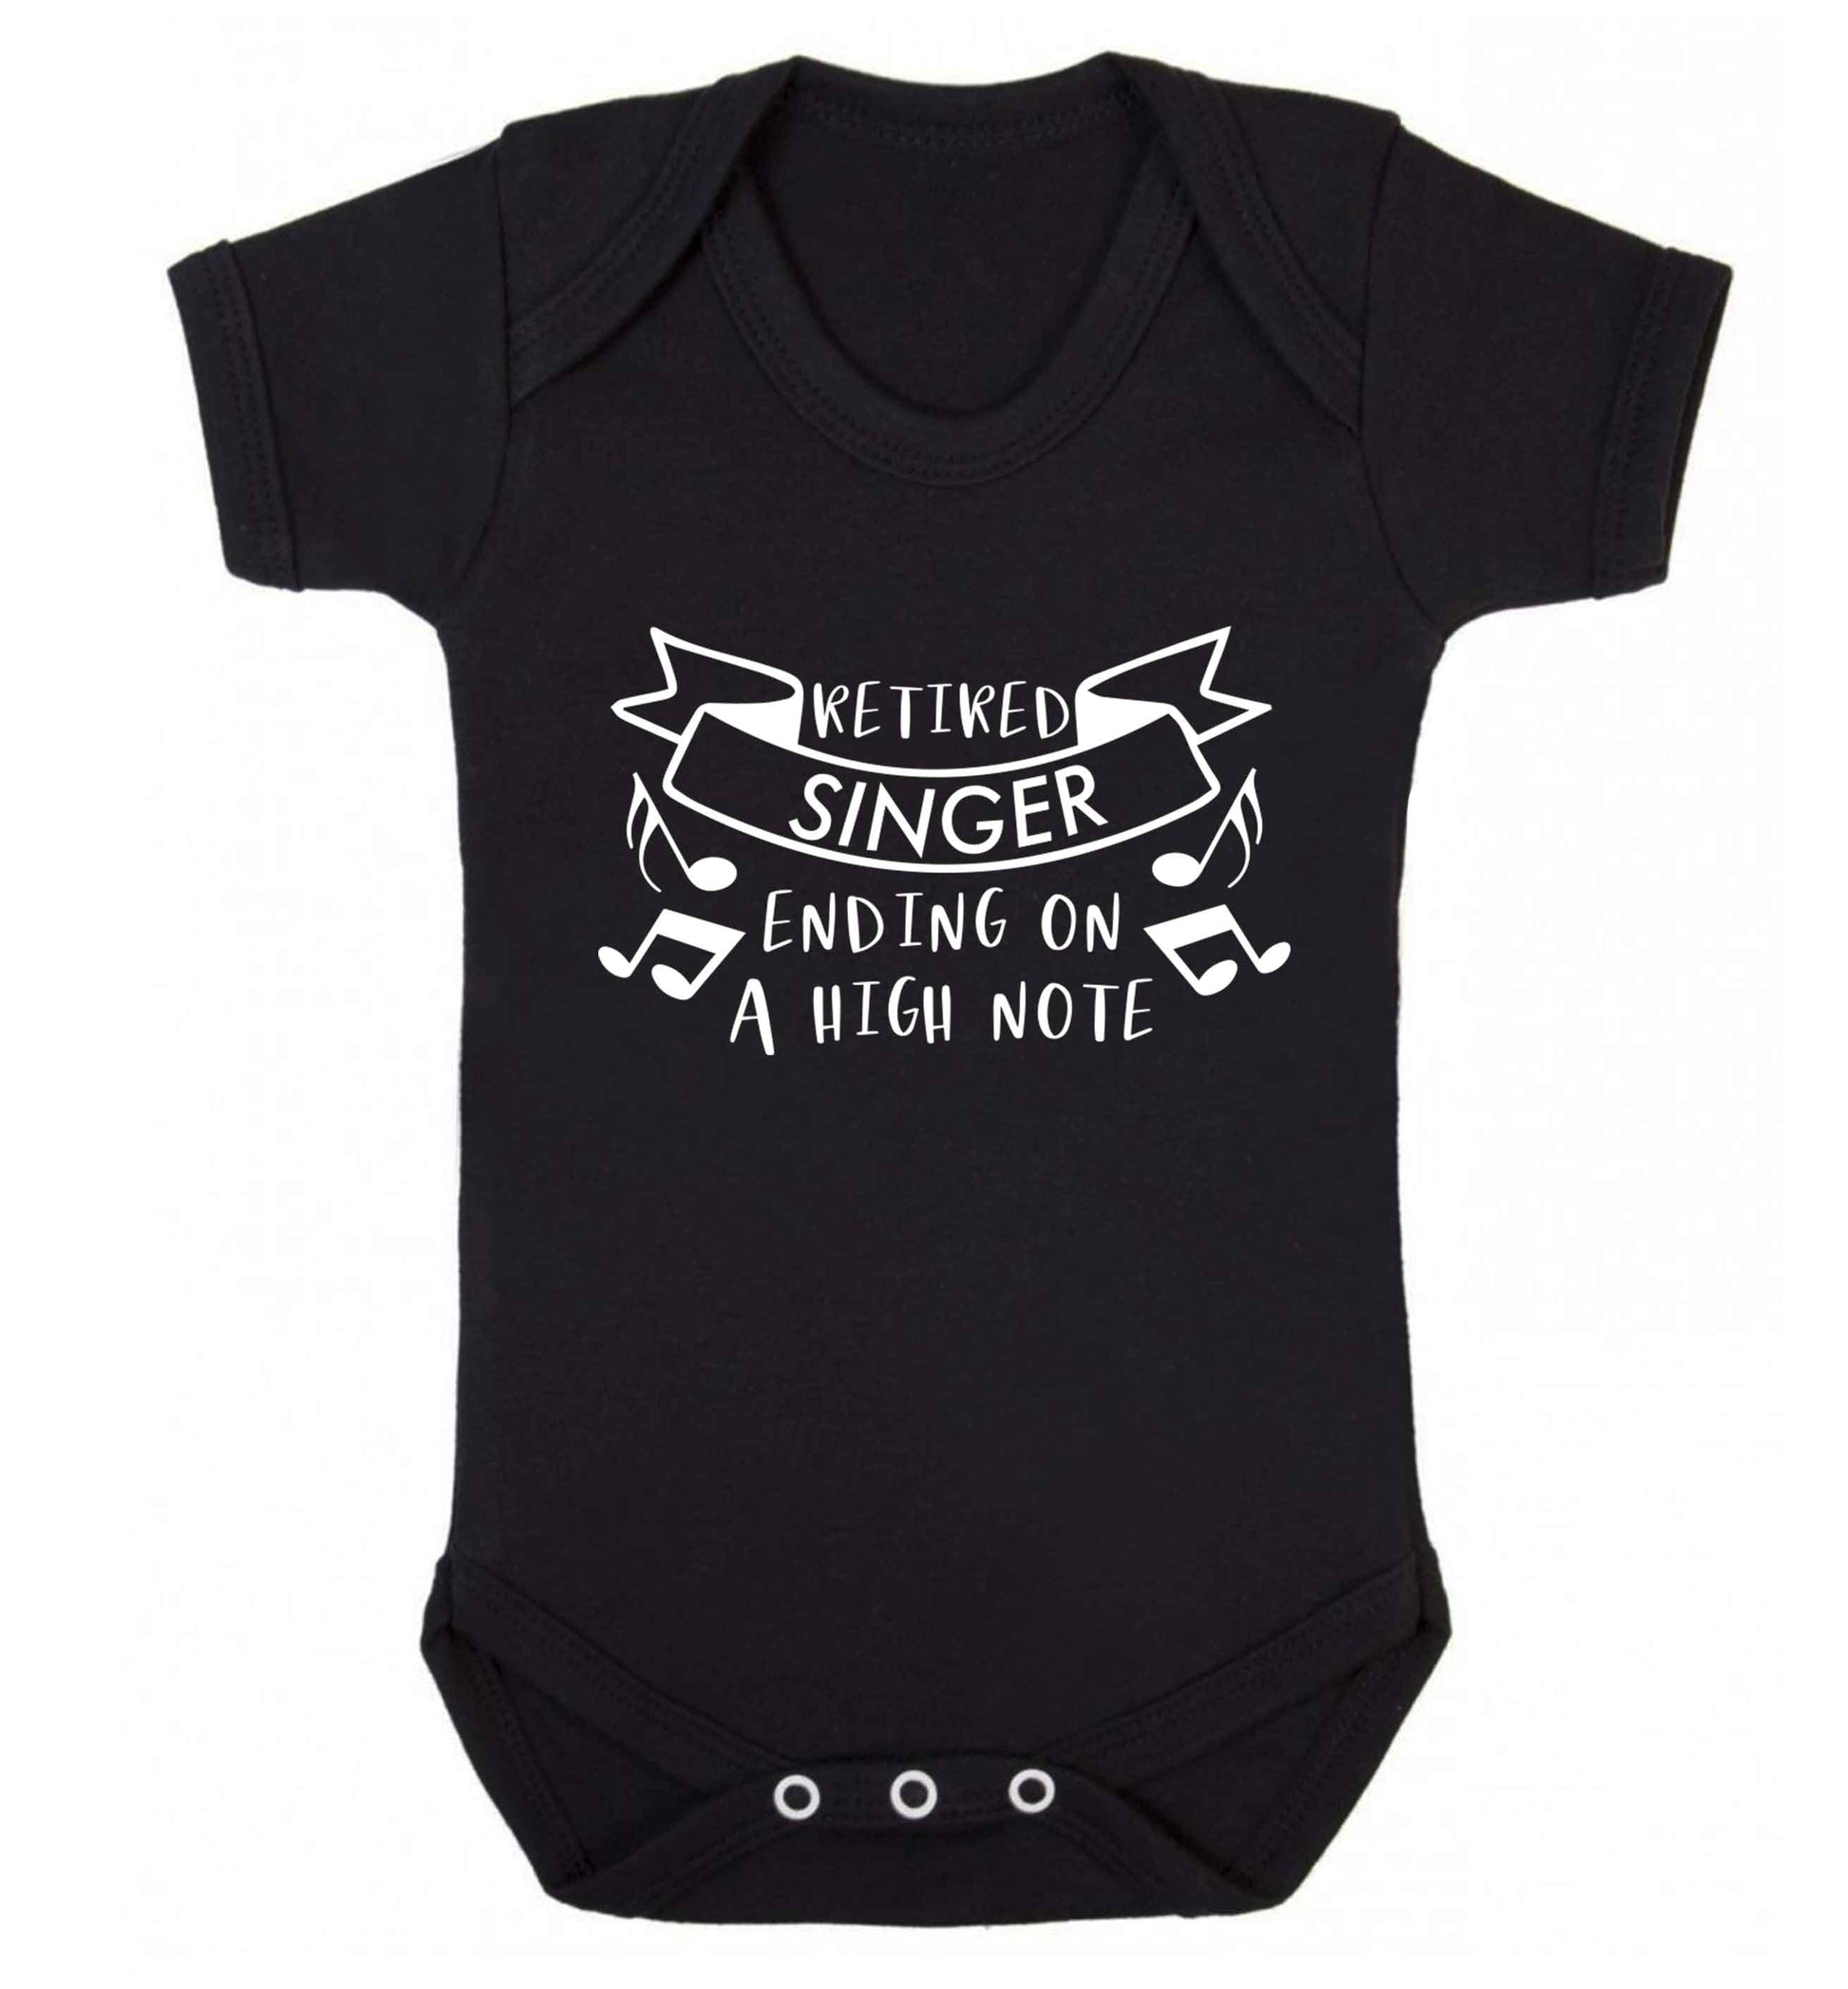 Retired singer ending on a high note Baby Vest black 18-24 months